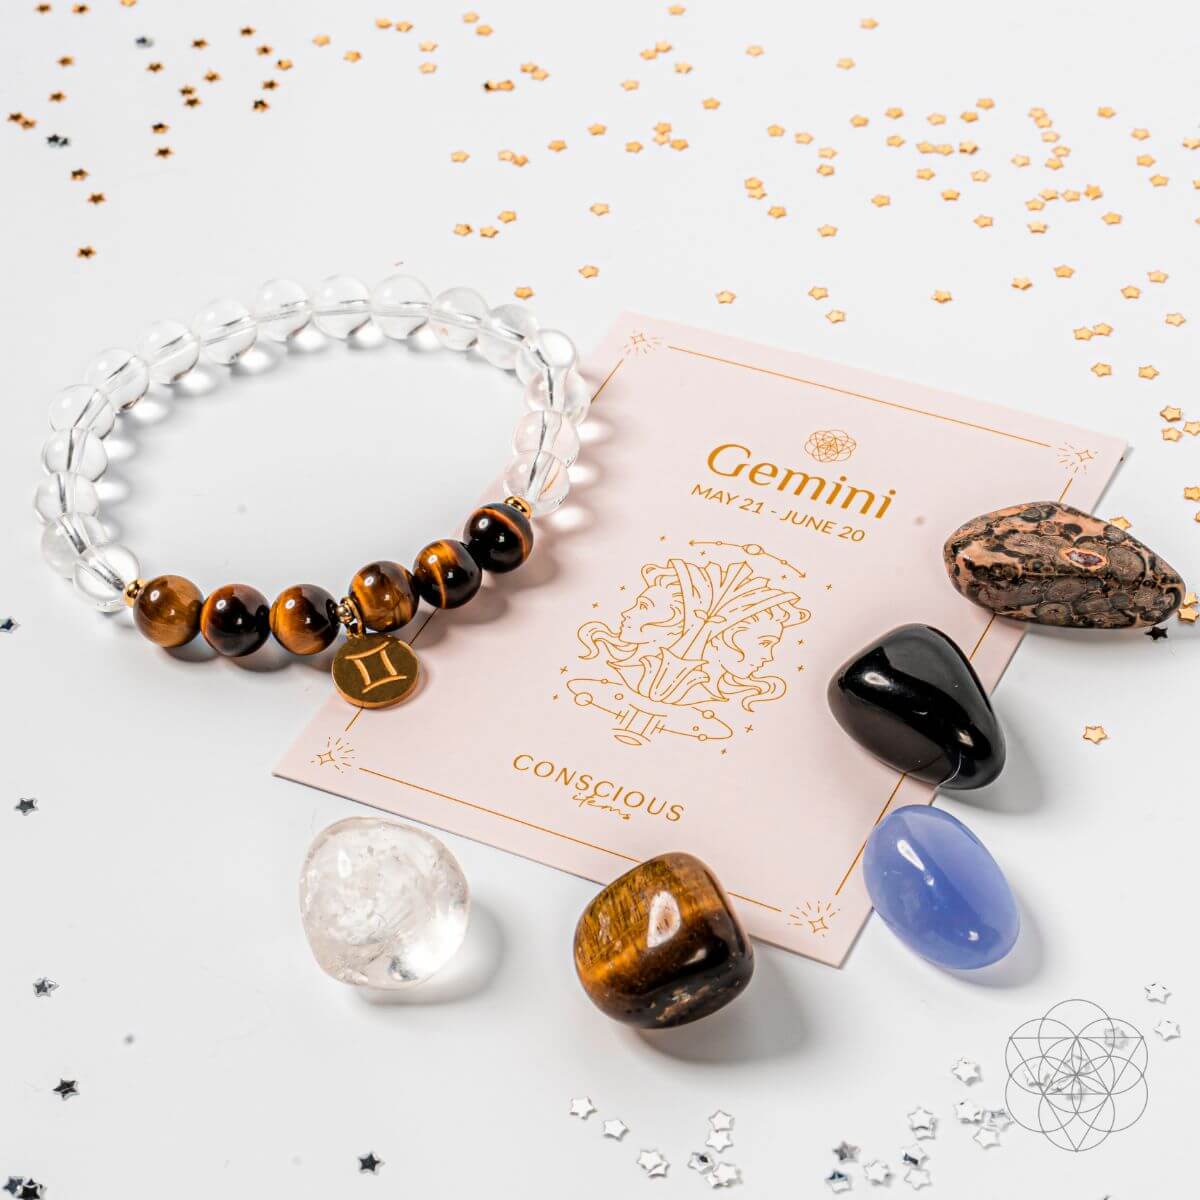 Gemini Bracelet and Crystals Set